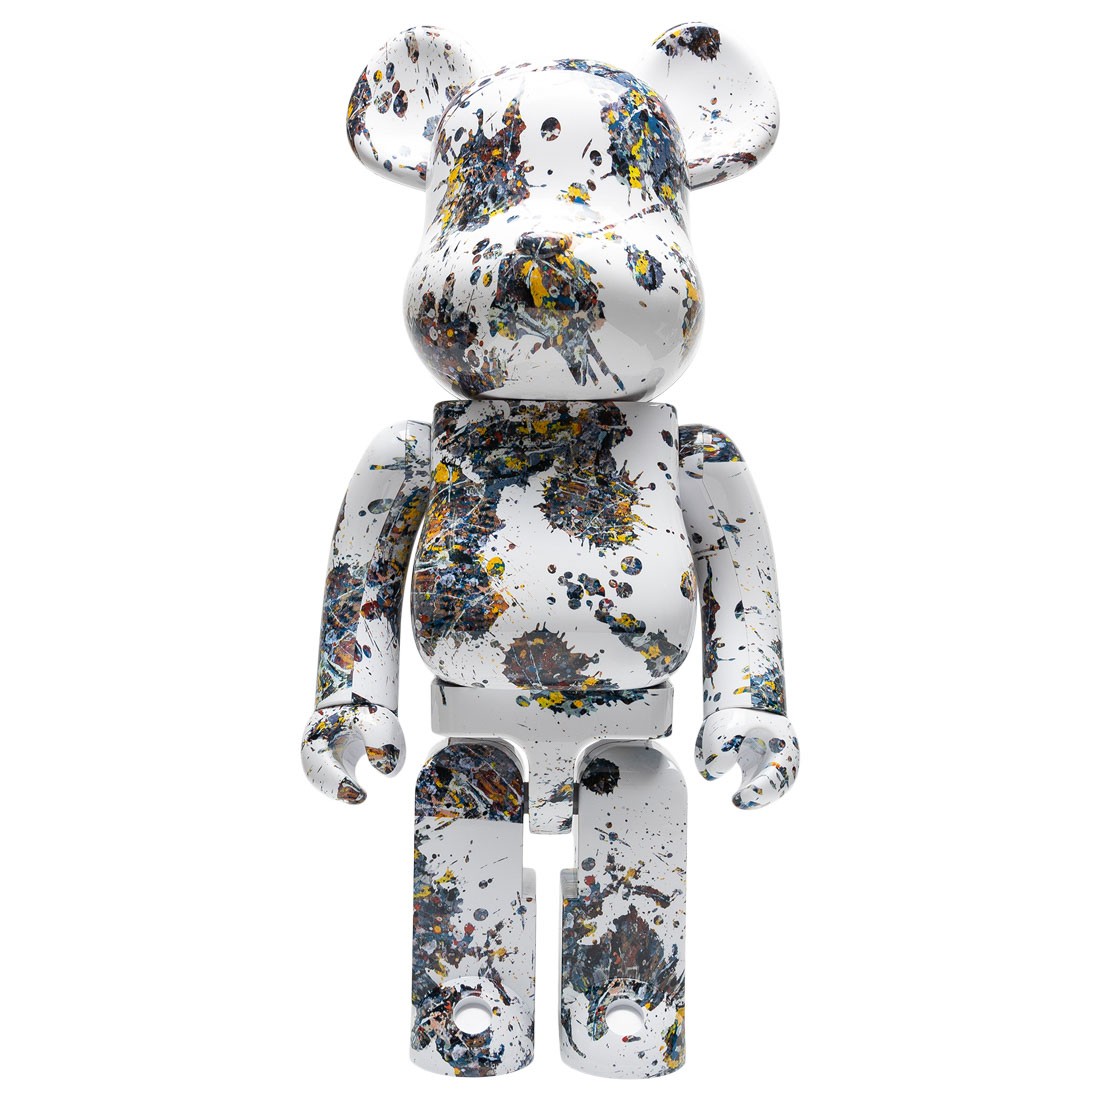 Medicom Jackson Pollock Studio Splash 1000% Bearbrick Figure (multi)